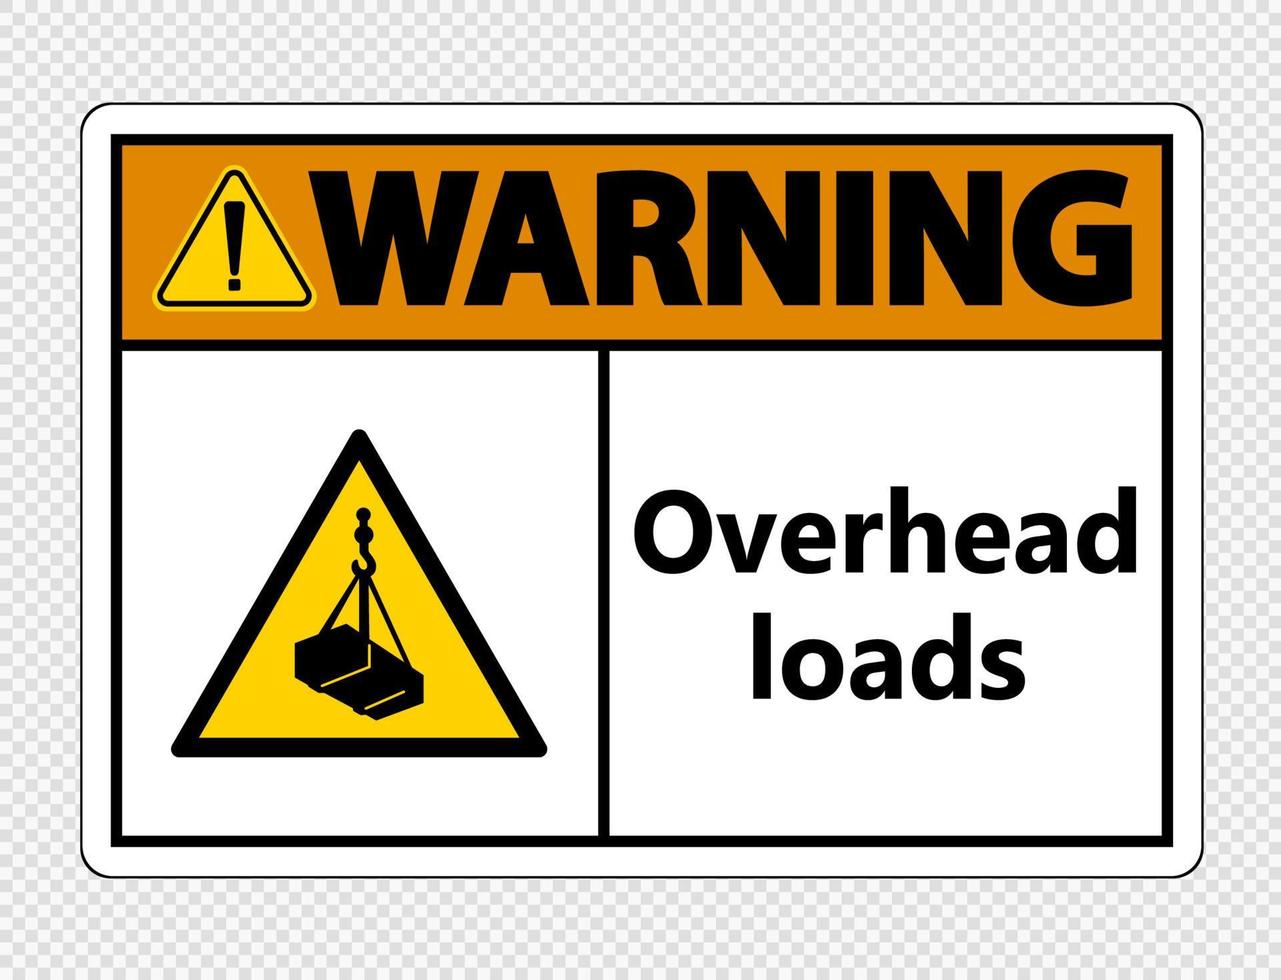 Warning overhead loads Sign vector